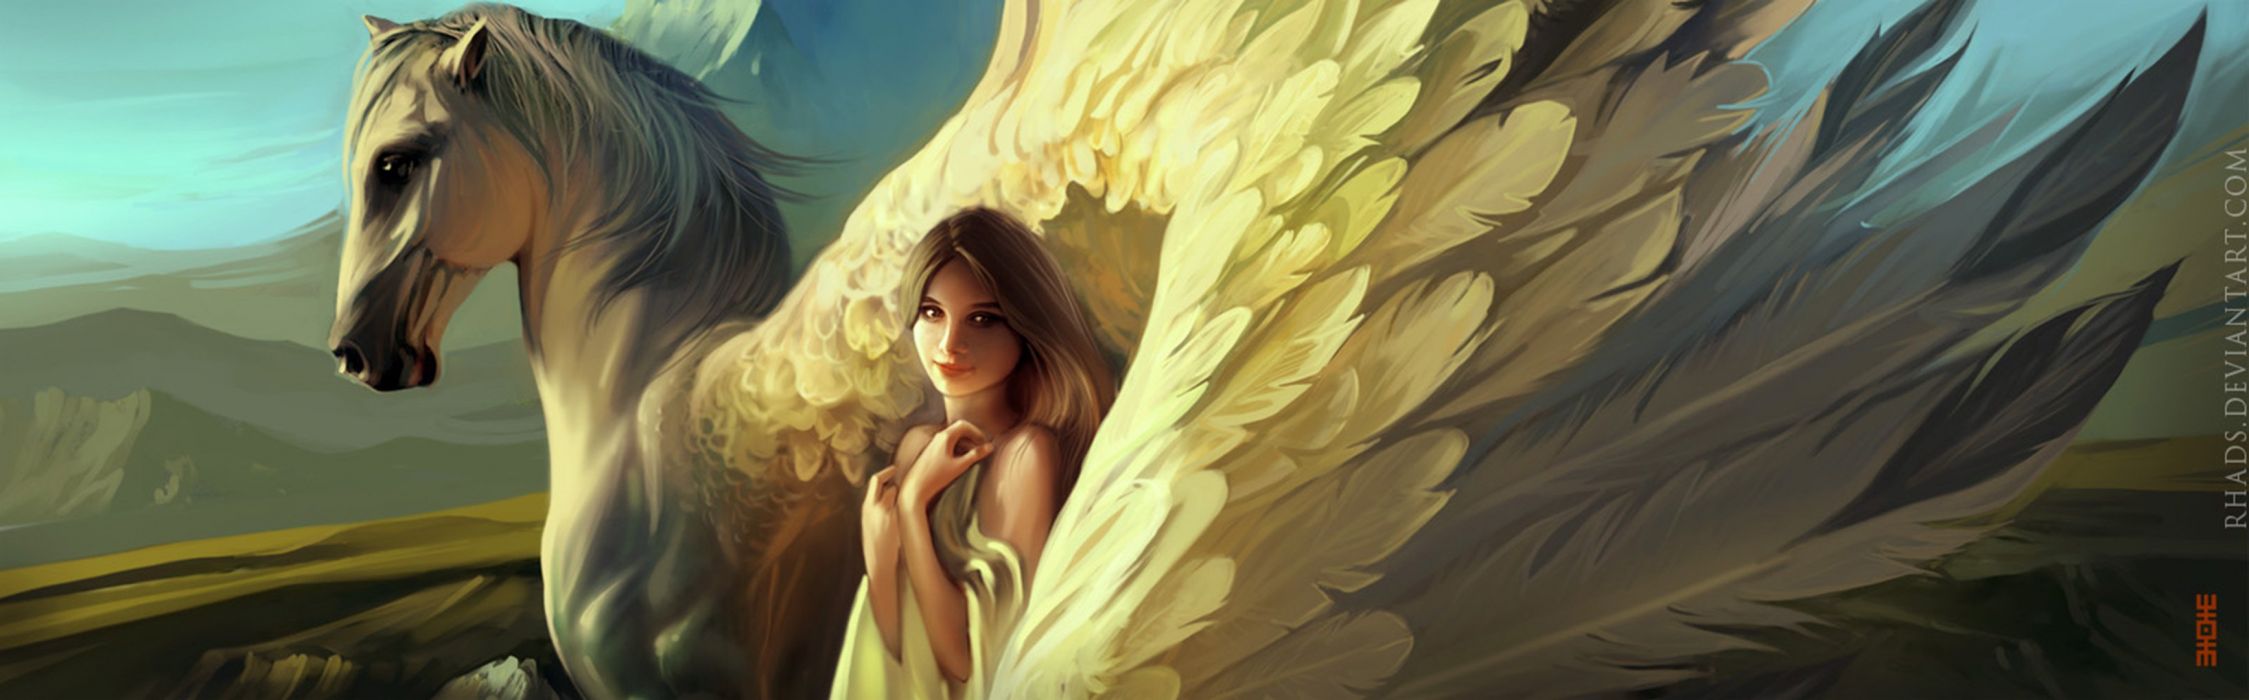 Pegasus angel painting girl artwork mood love fantasy feathers wings wallpaperx1080